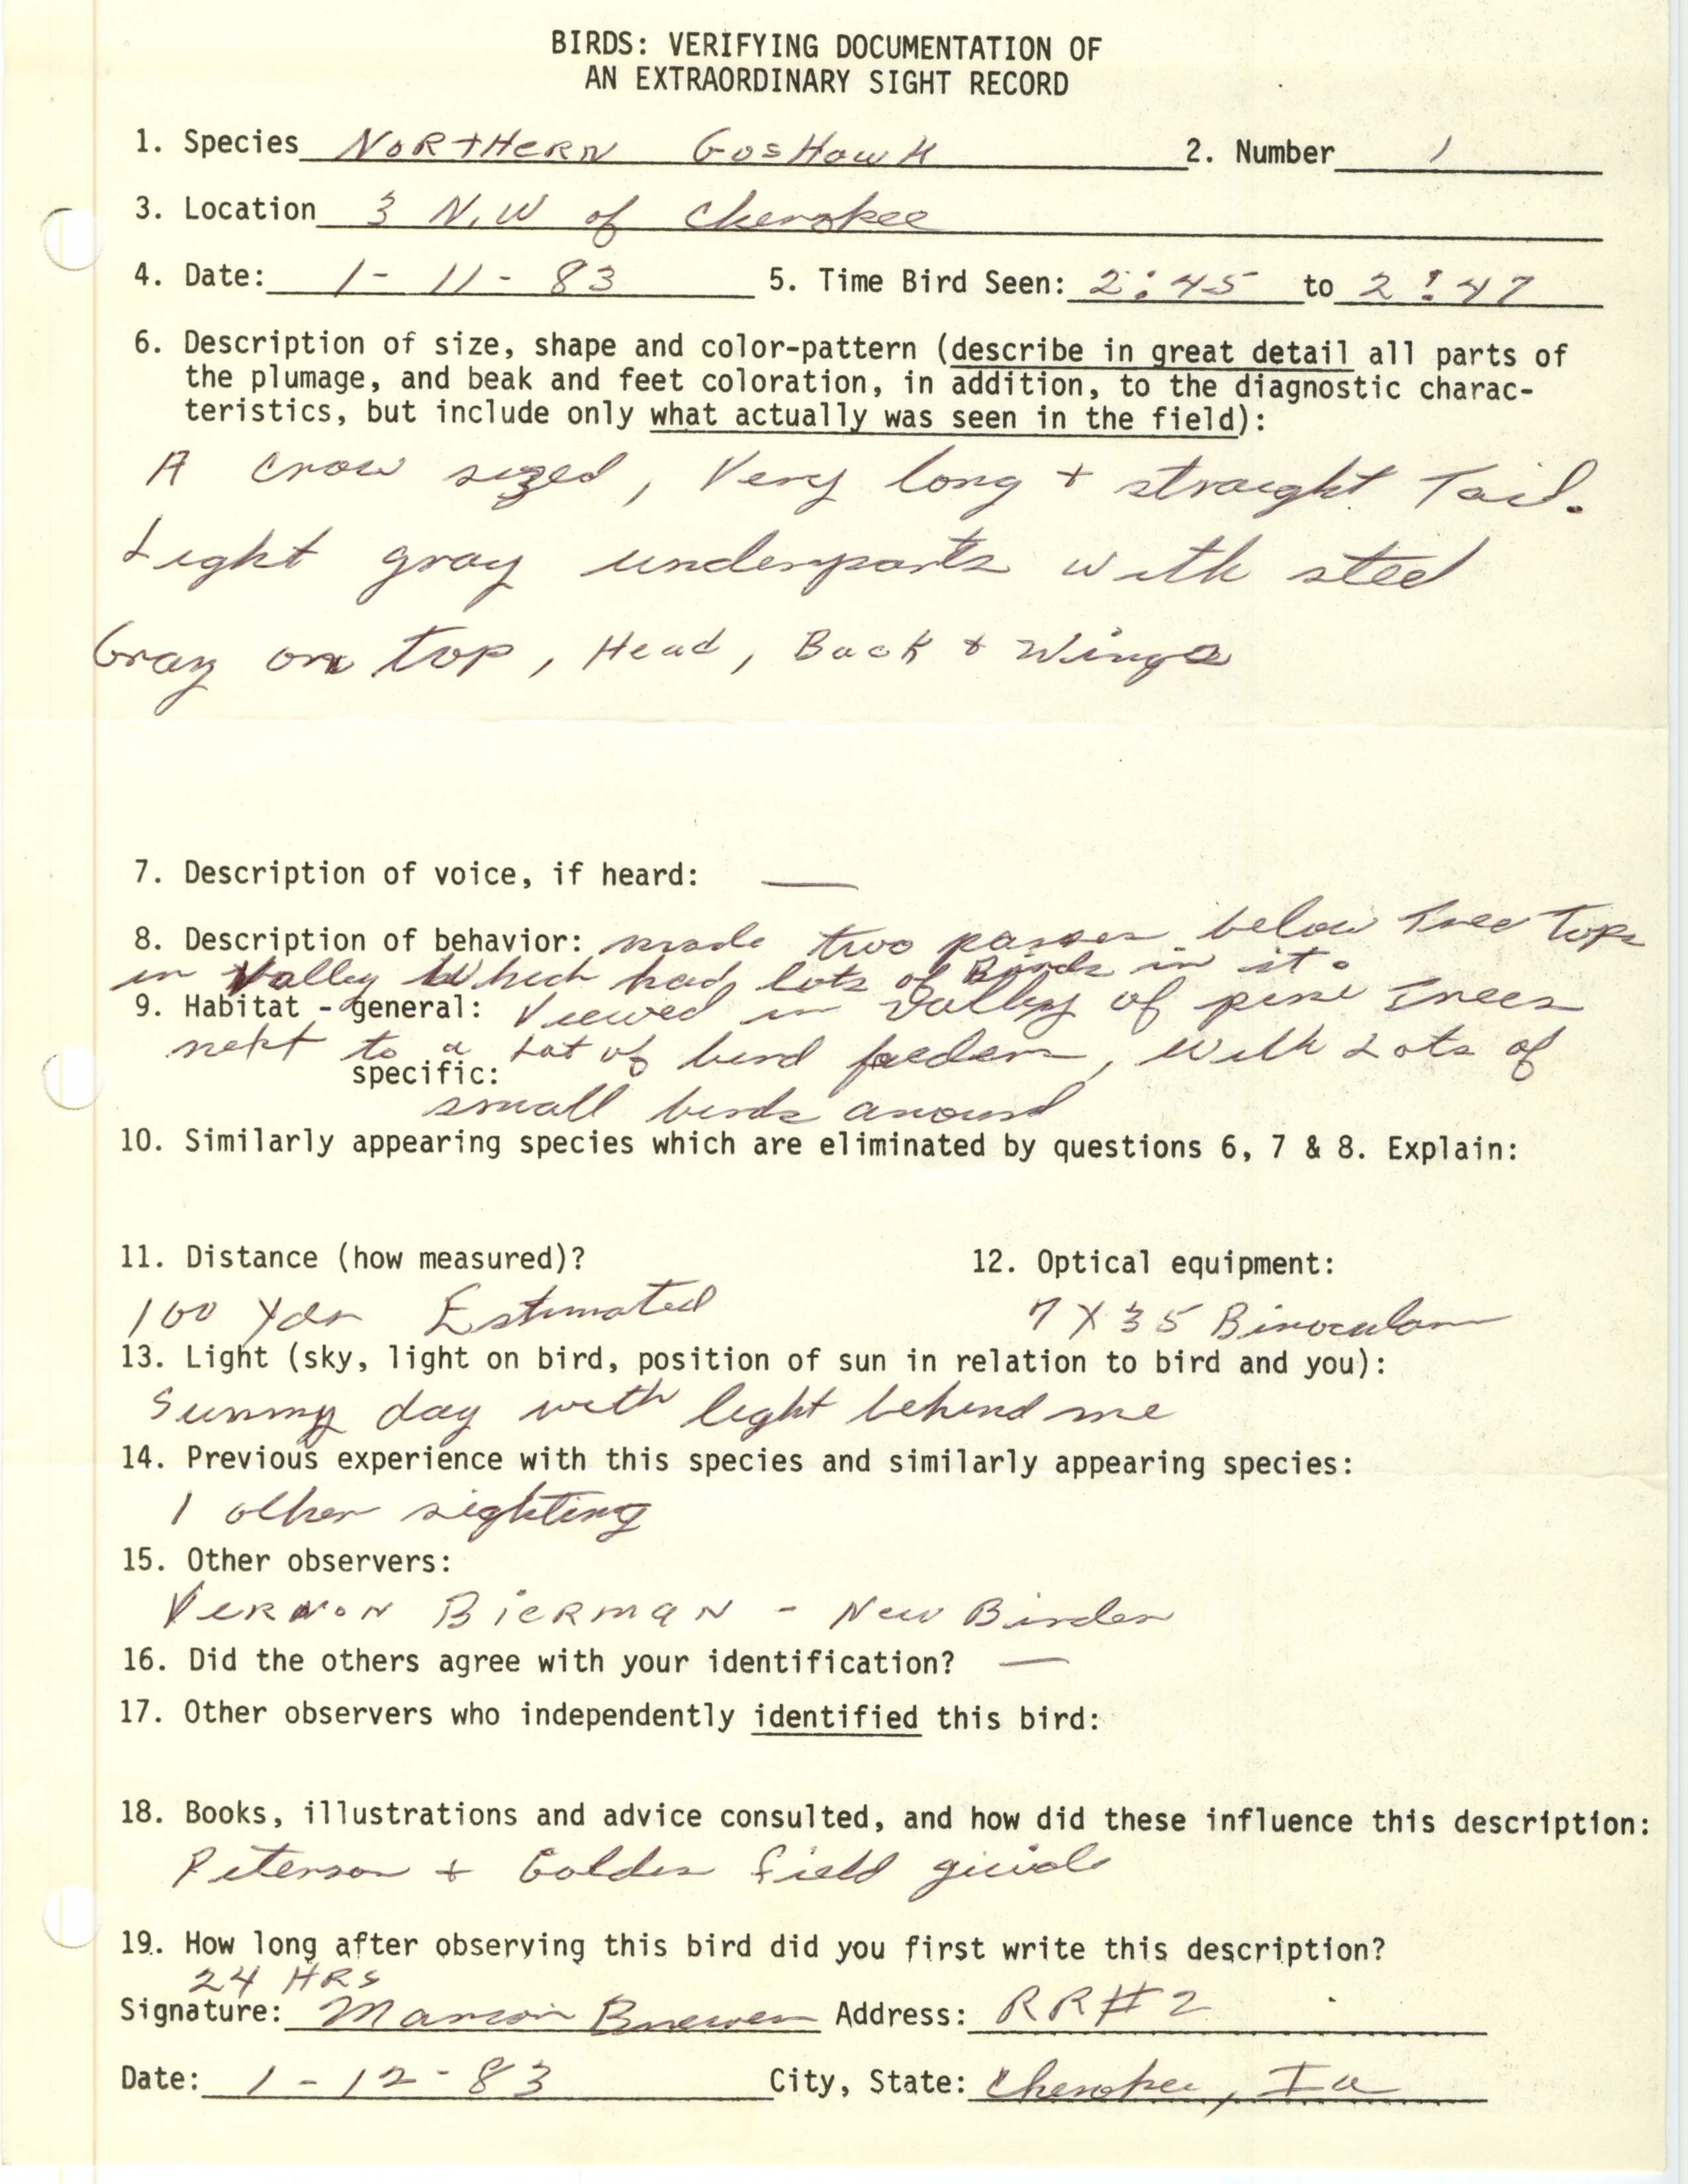 Rare bird documentation form for Northern Goshawk at Cherokee, 1983